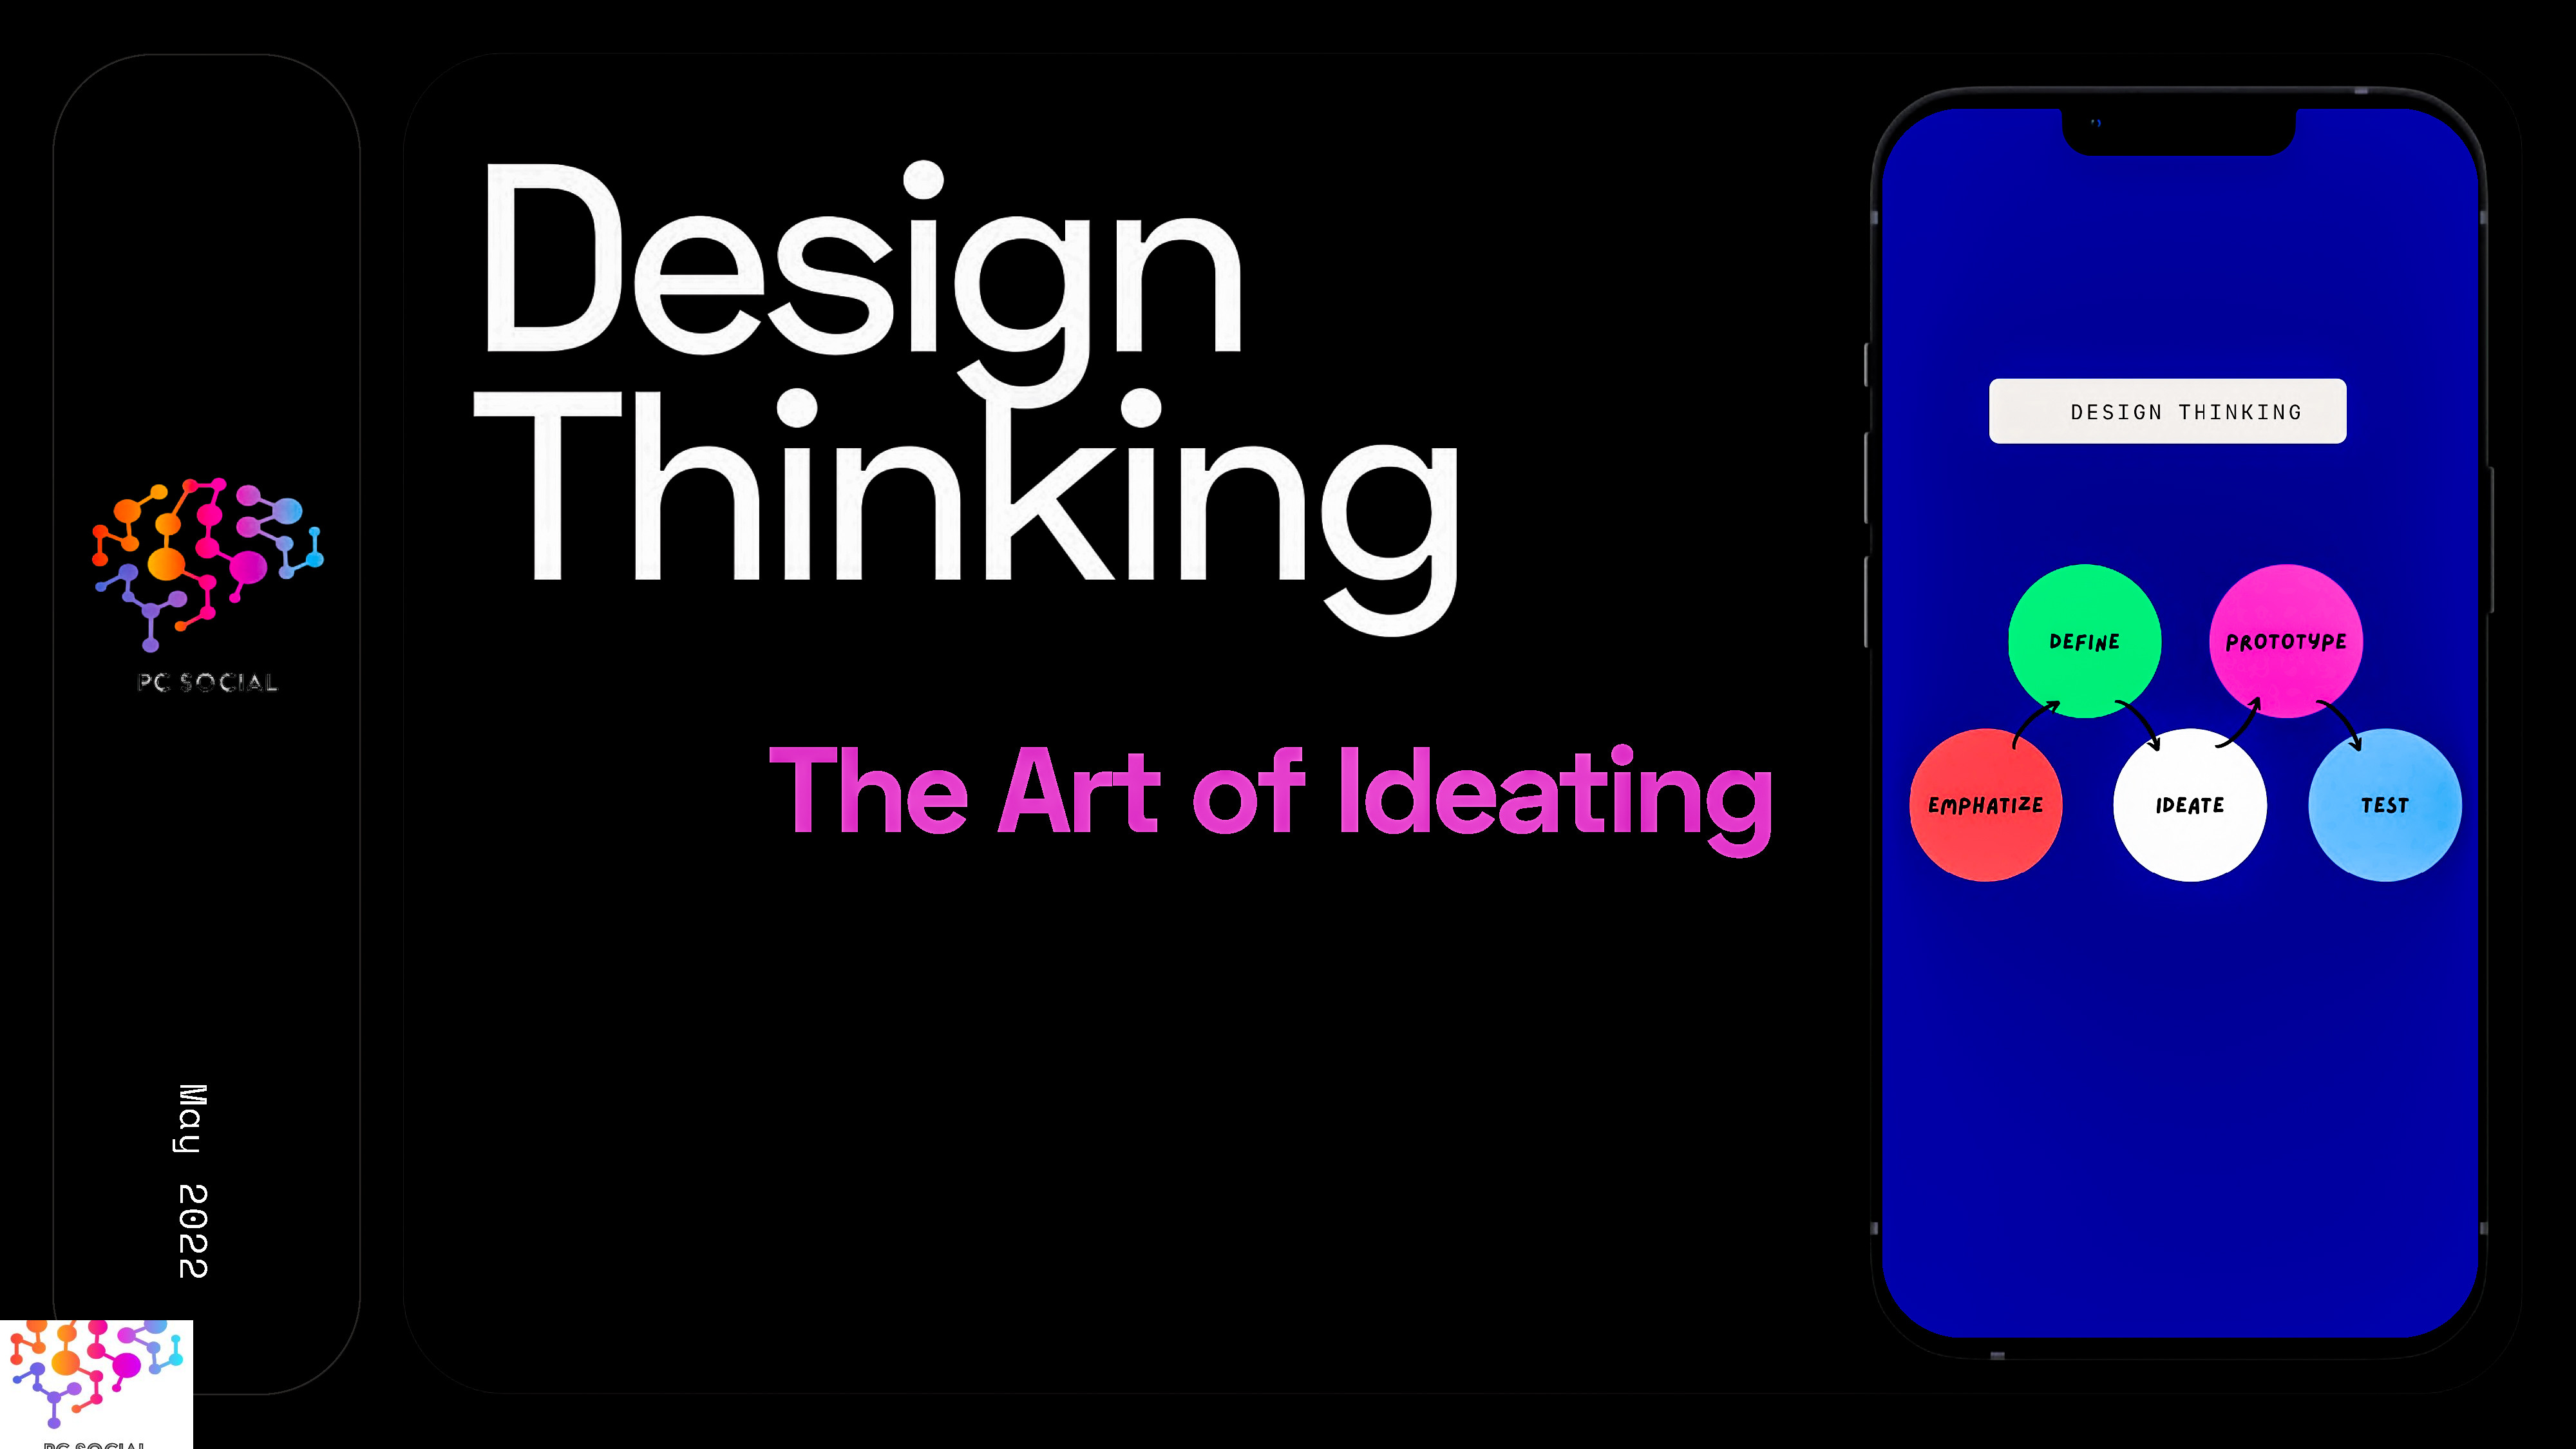 Design, Marketing, Product Management, Design Thinking, Innovation, Phases